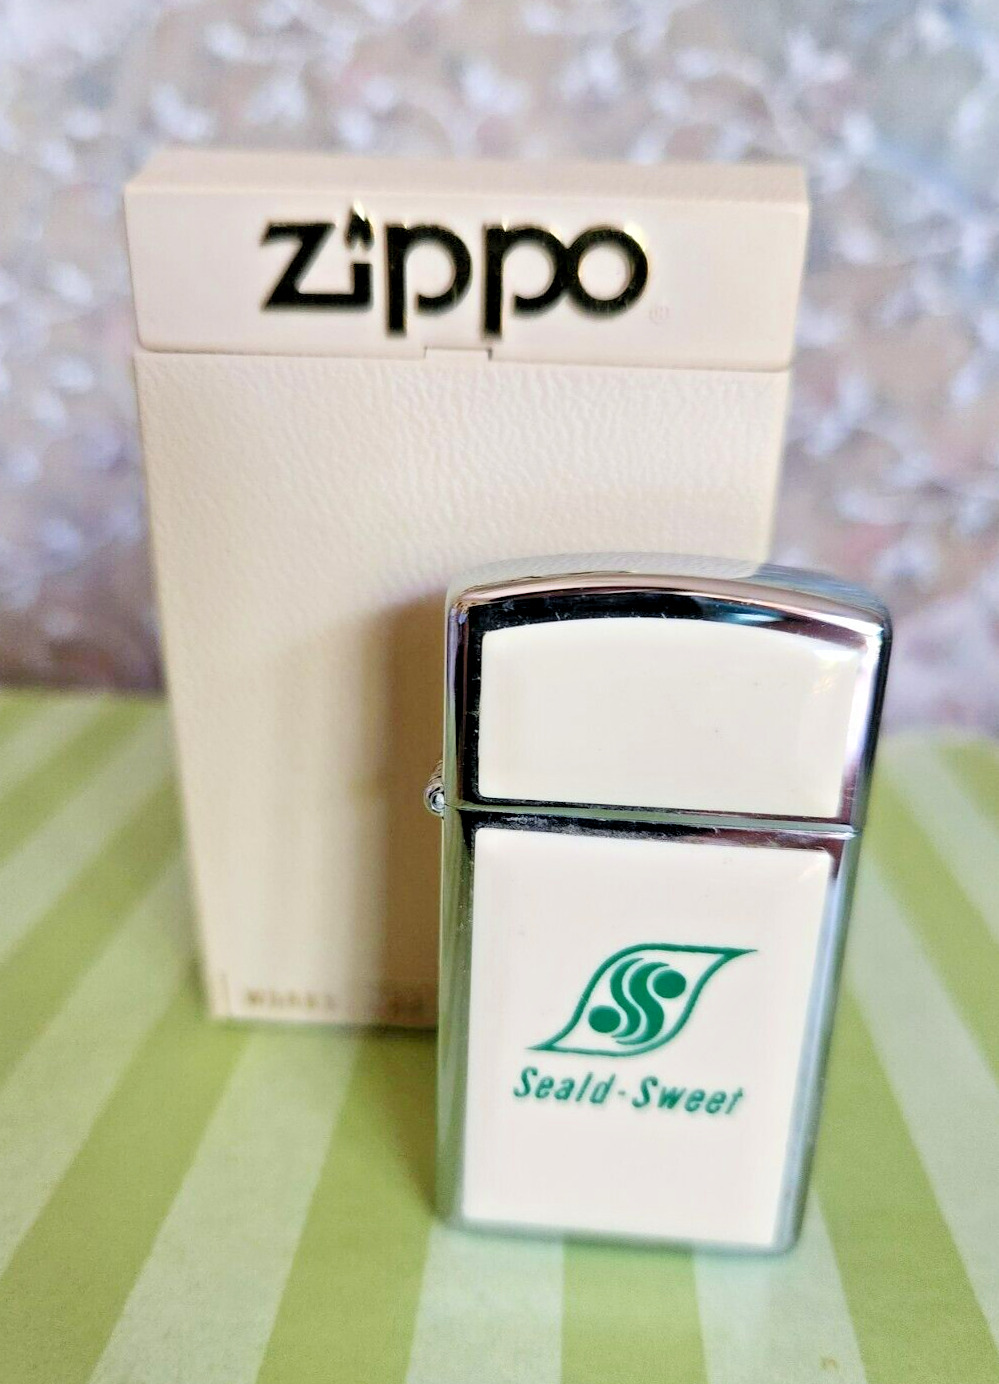 Zippo Vintage Lighter in Case Rare Bradford Pa.   Seald-Sweet Advertising